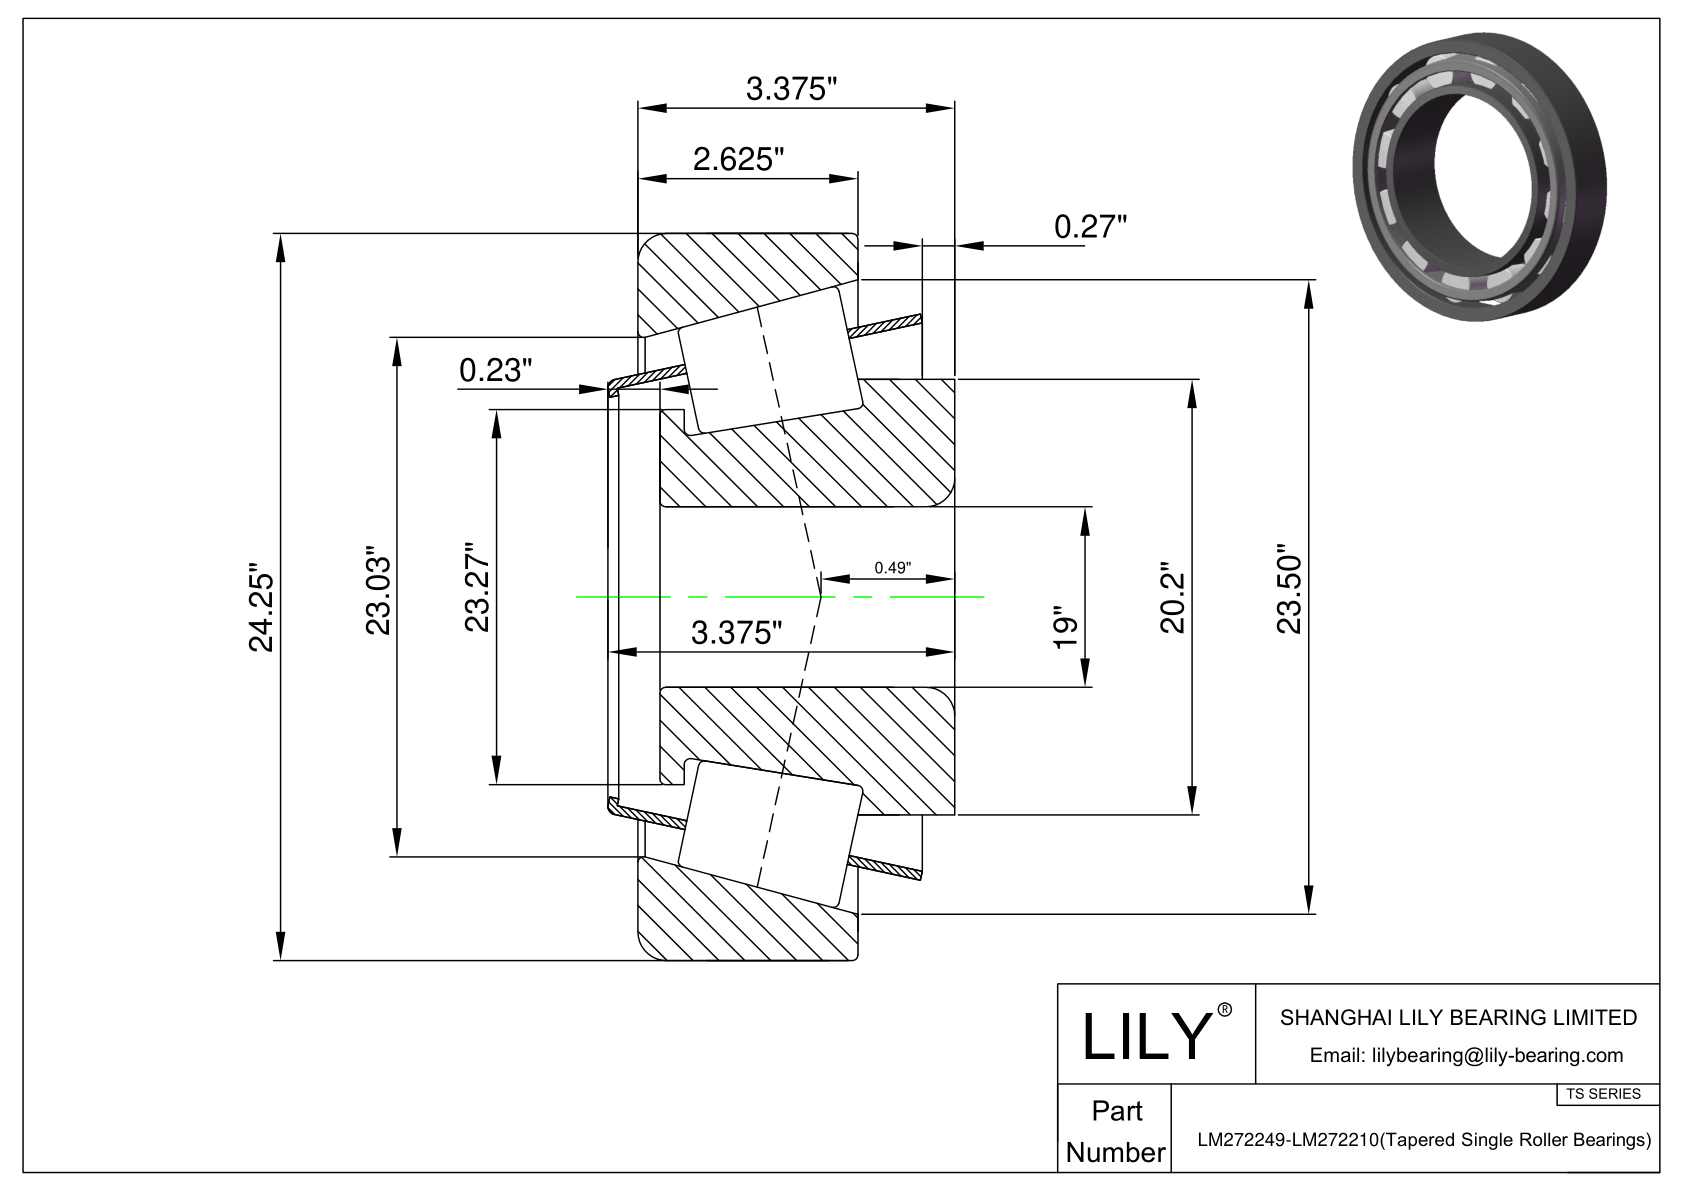 LM272249-LM272210 TS系列(圆锥单滚子轴承)(英制) CAD图形